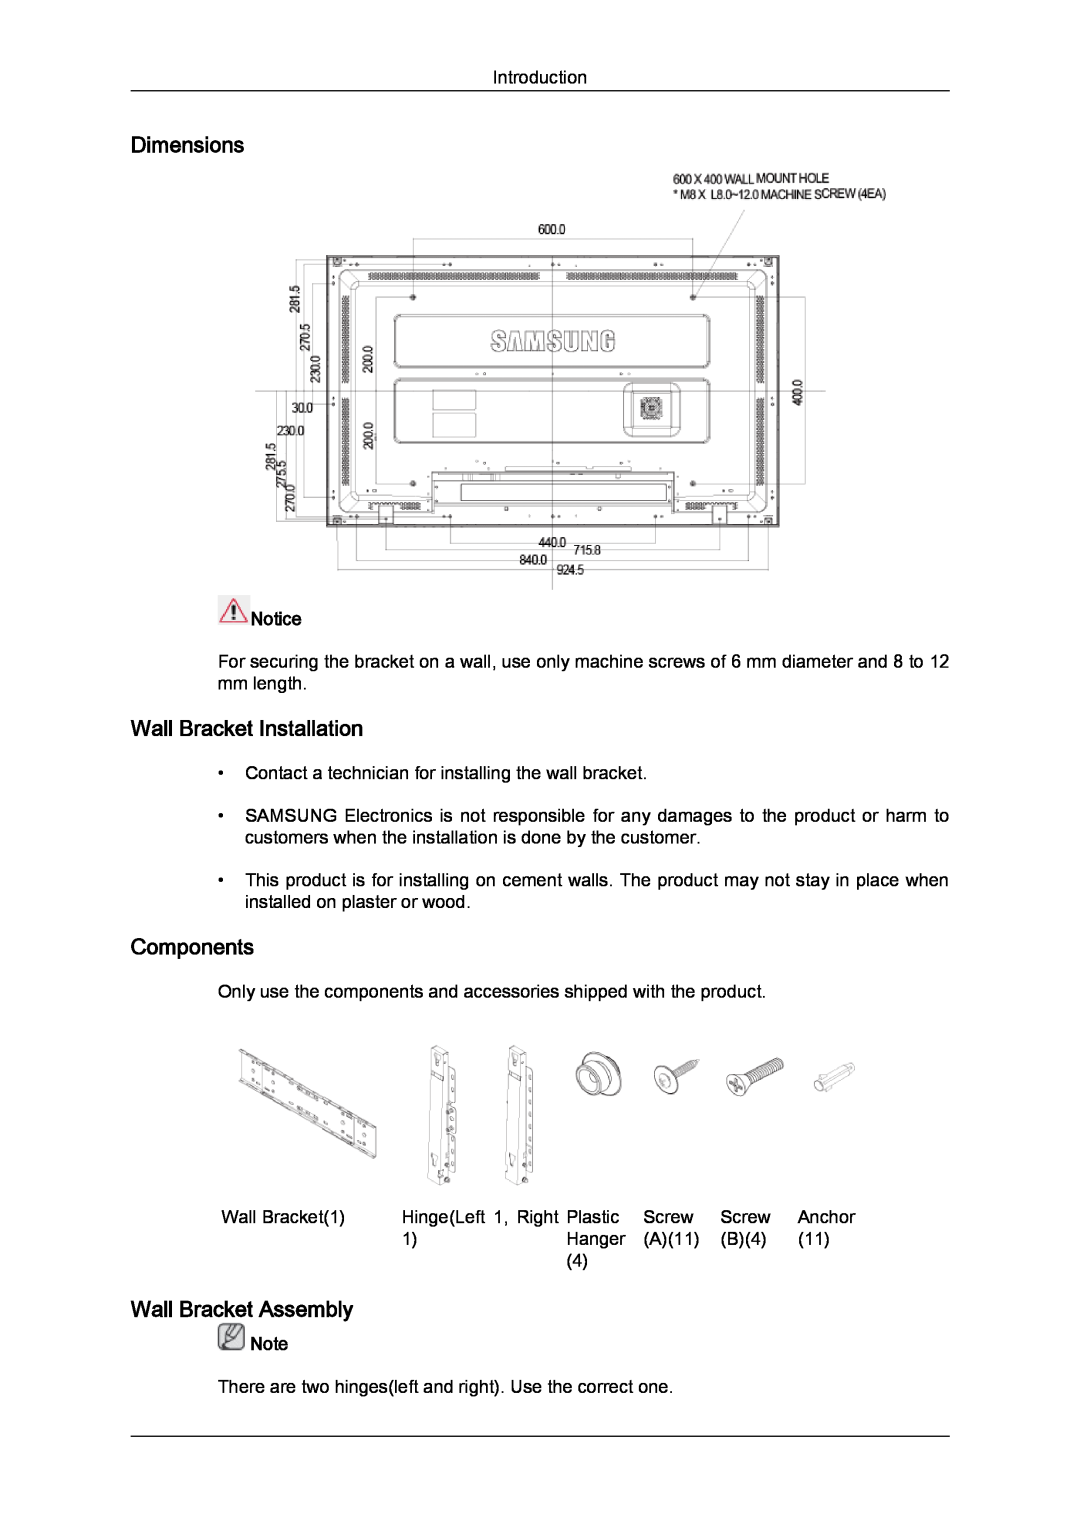 Samsung LH40MGUMBC/EN, LH46MGUMBC/EN manual Dimensions, Wall Bracket Installation, Components, Wall Bracket Assembly 